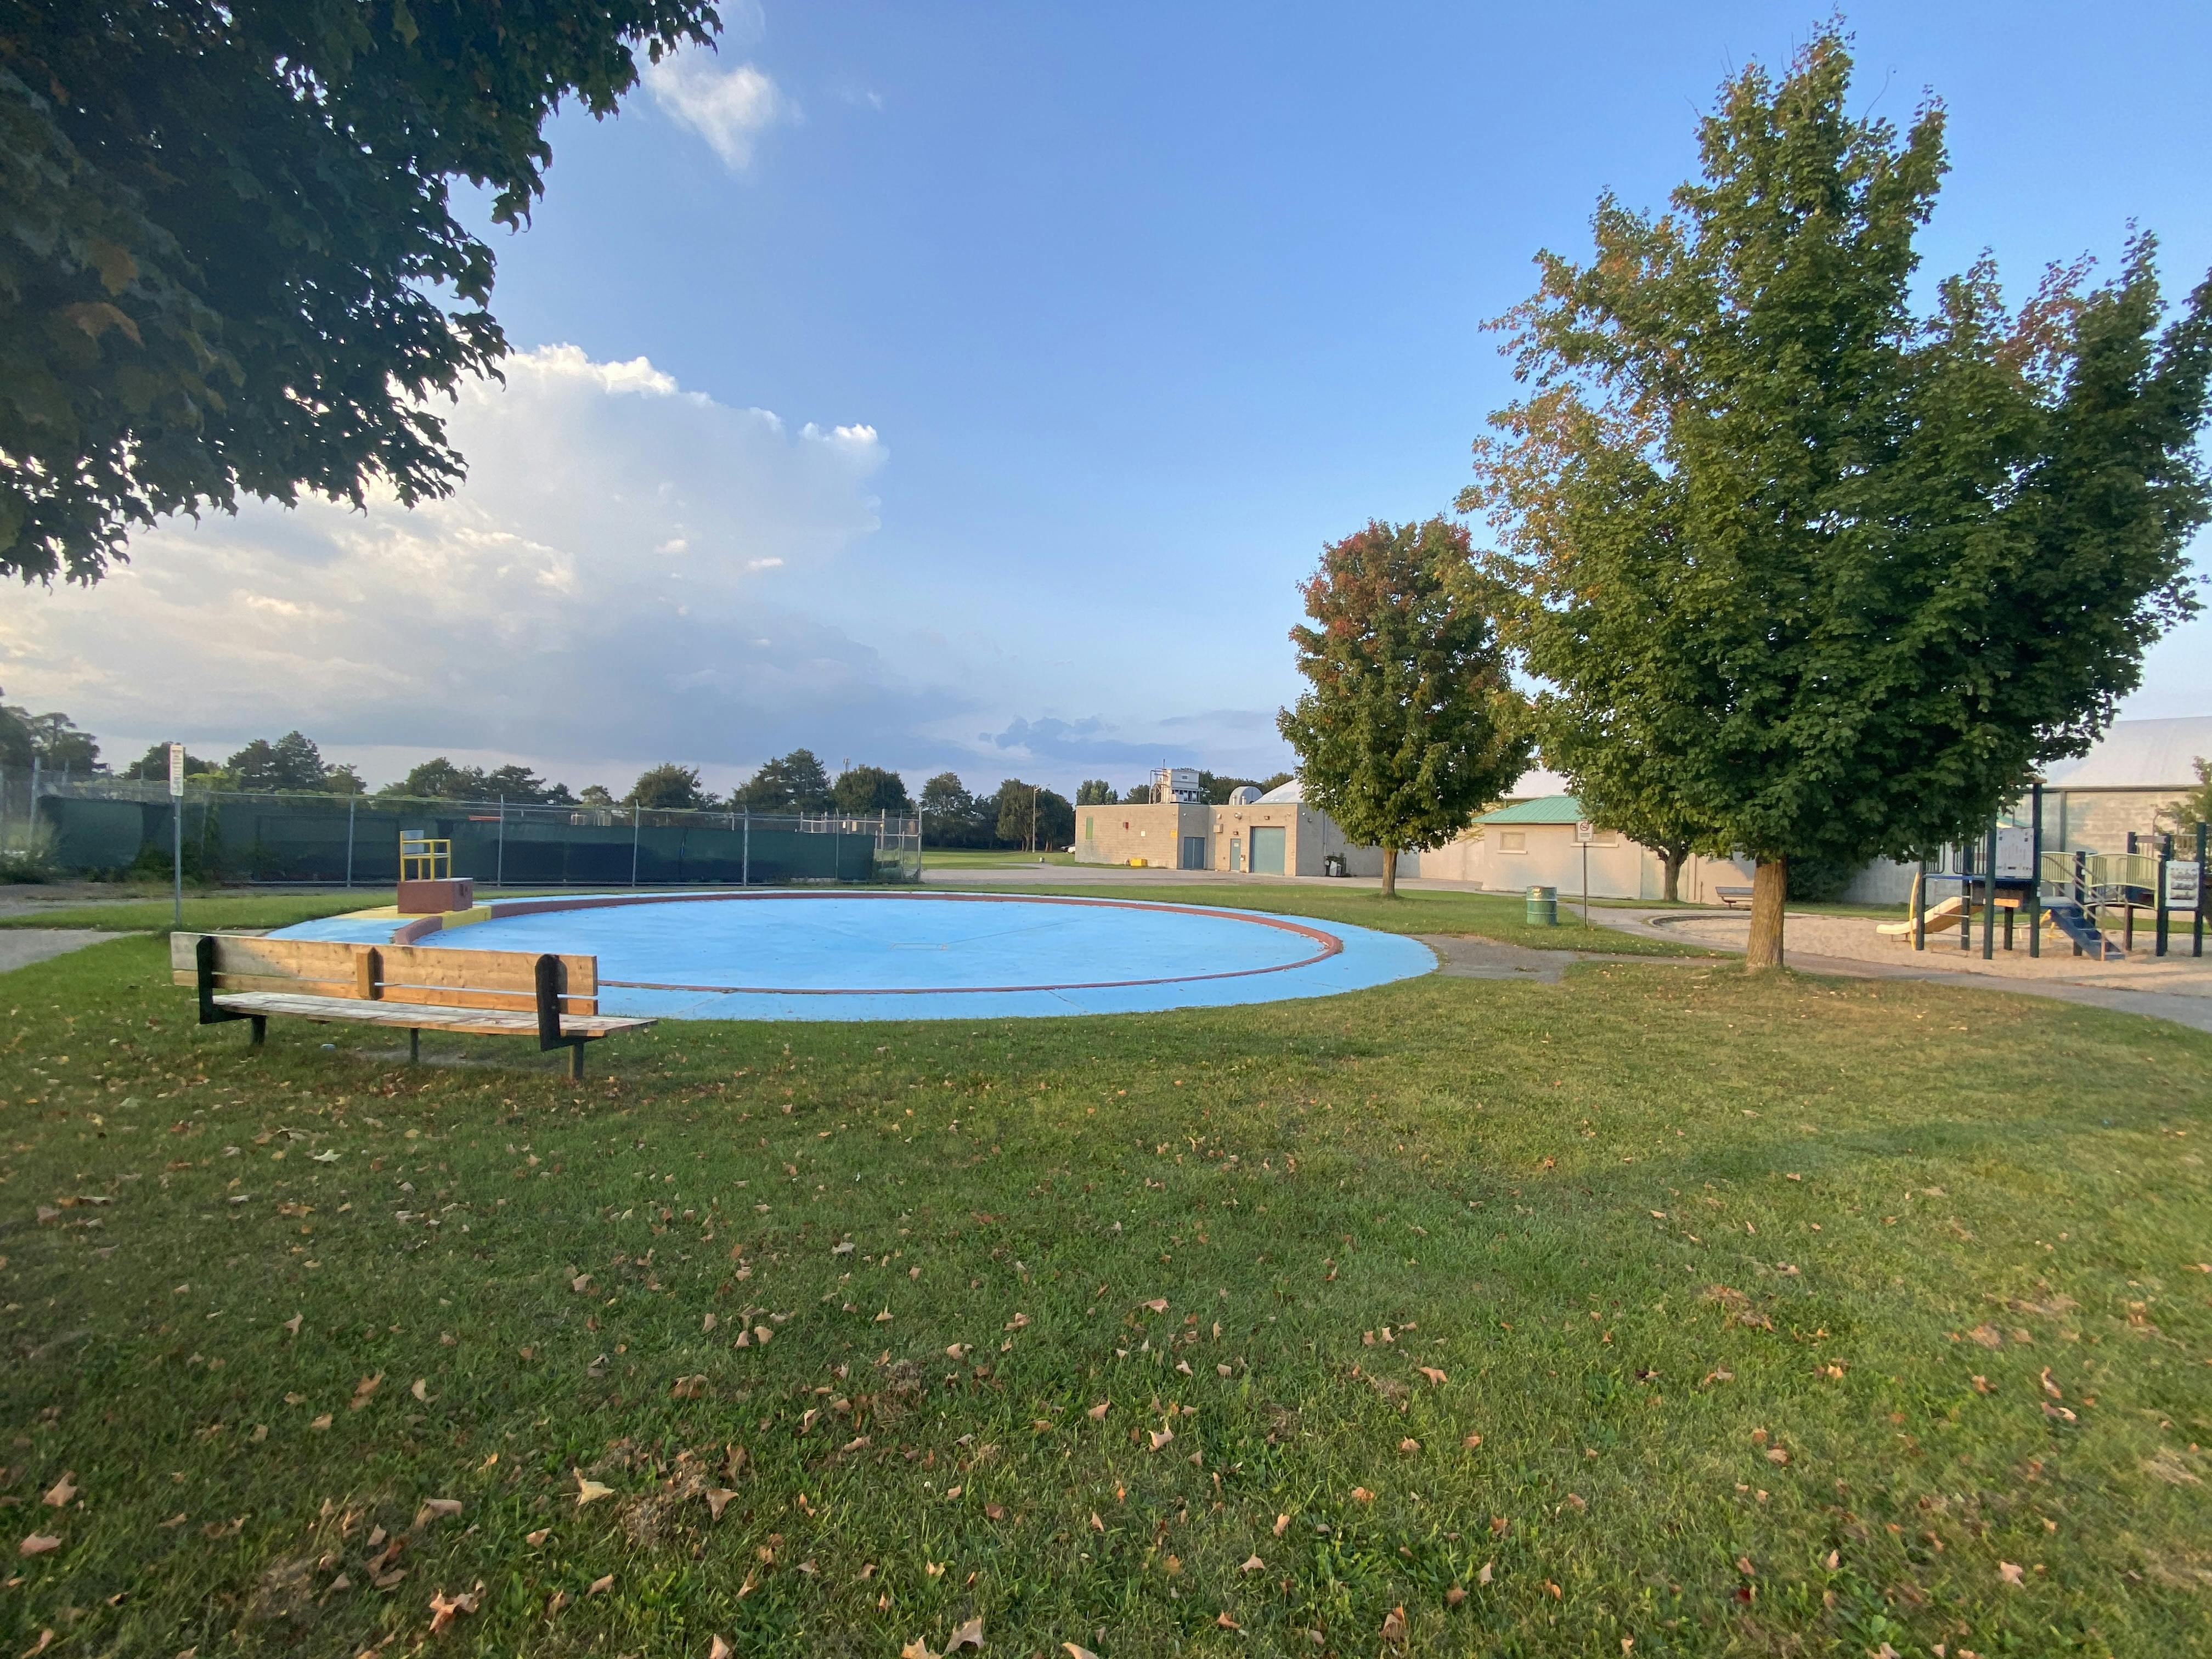 Silverwoods Park - wading pool